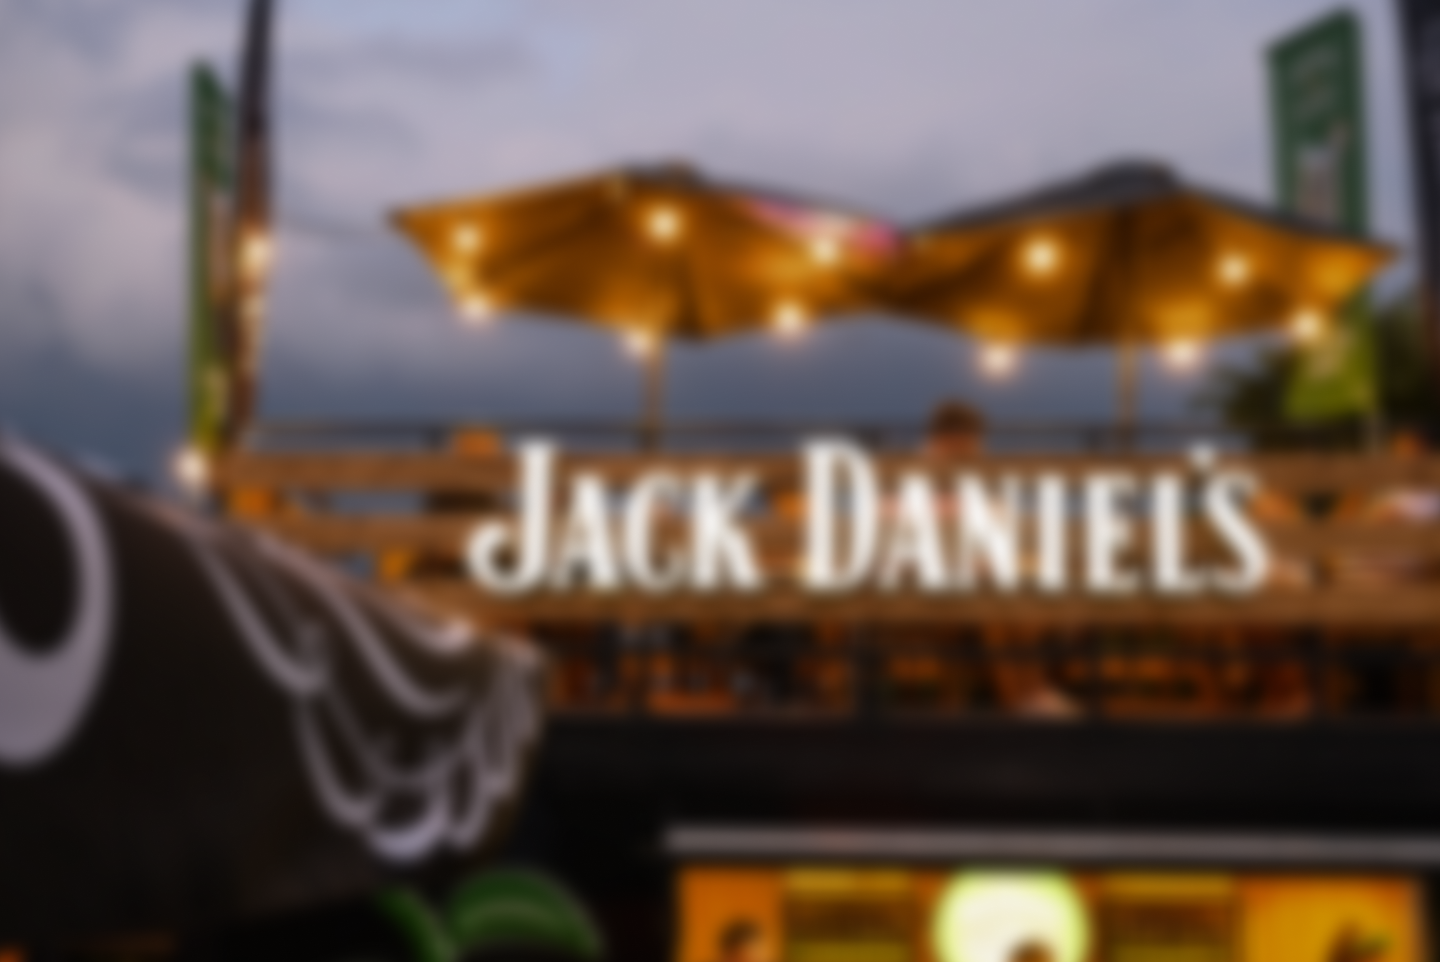 JACK DANIELS